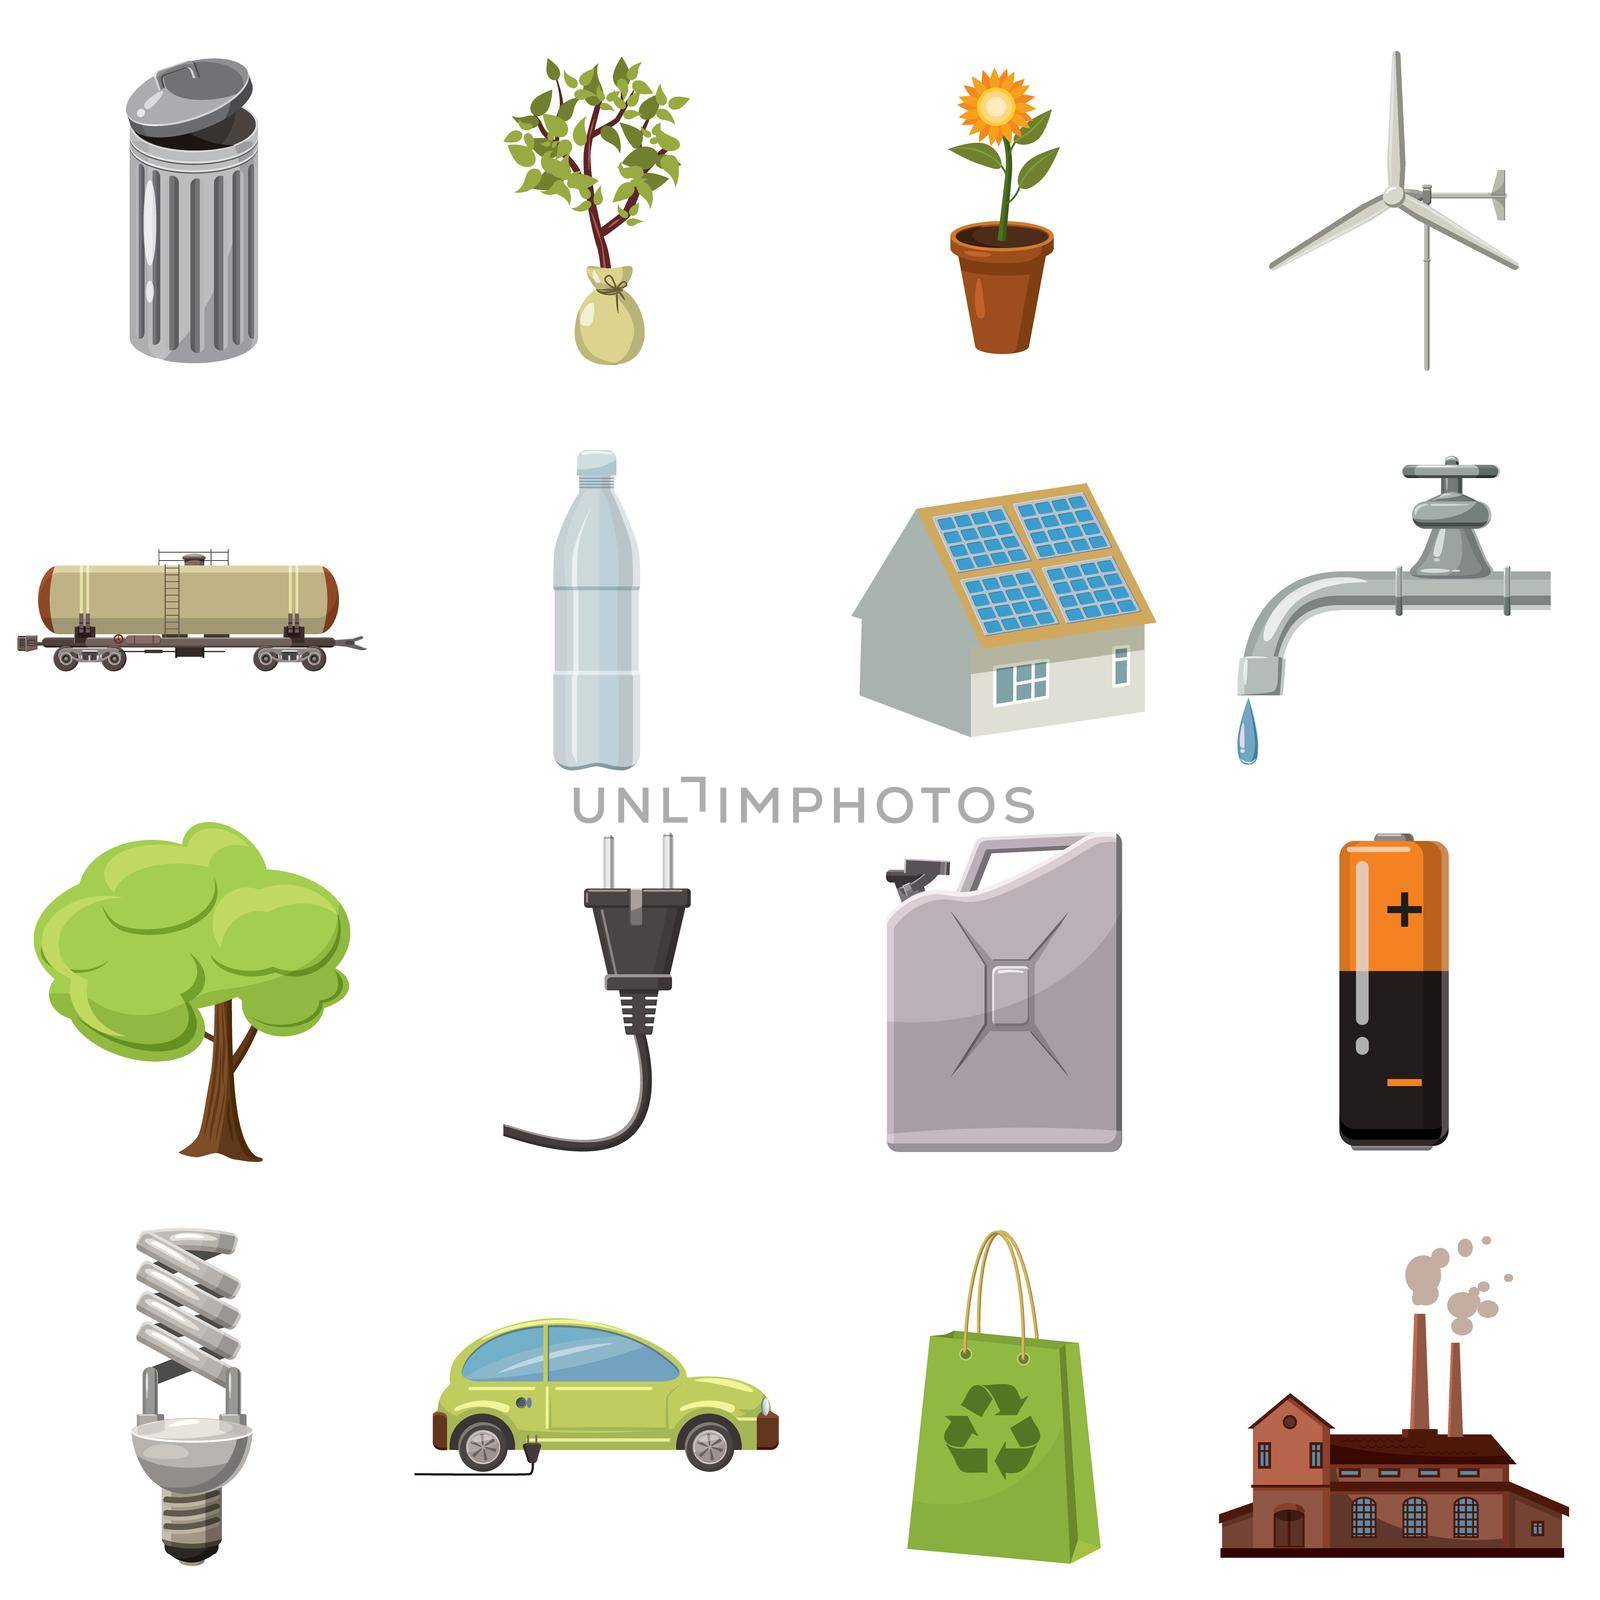 Ecology icons set in cartoon style isolated on white background